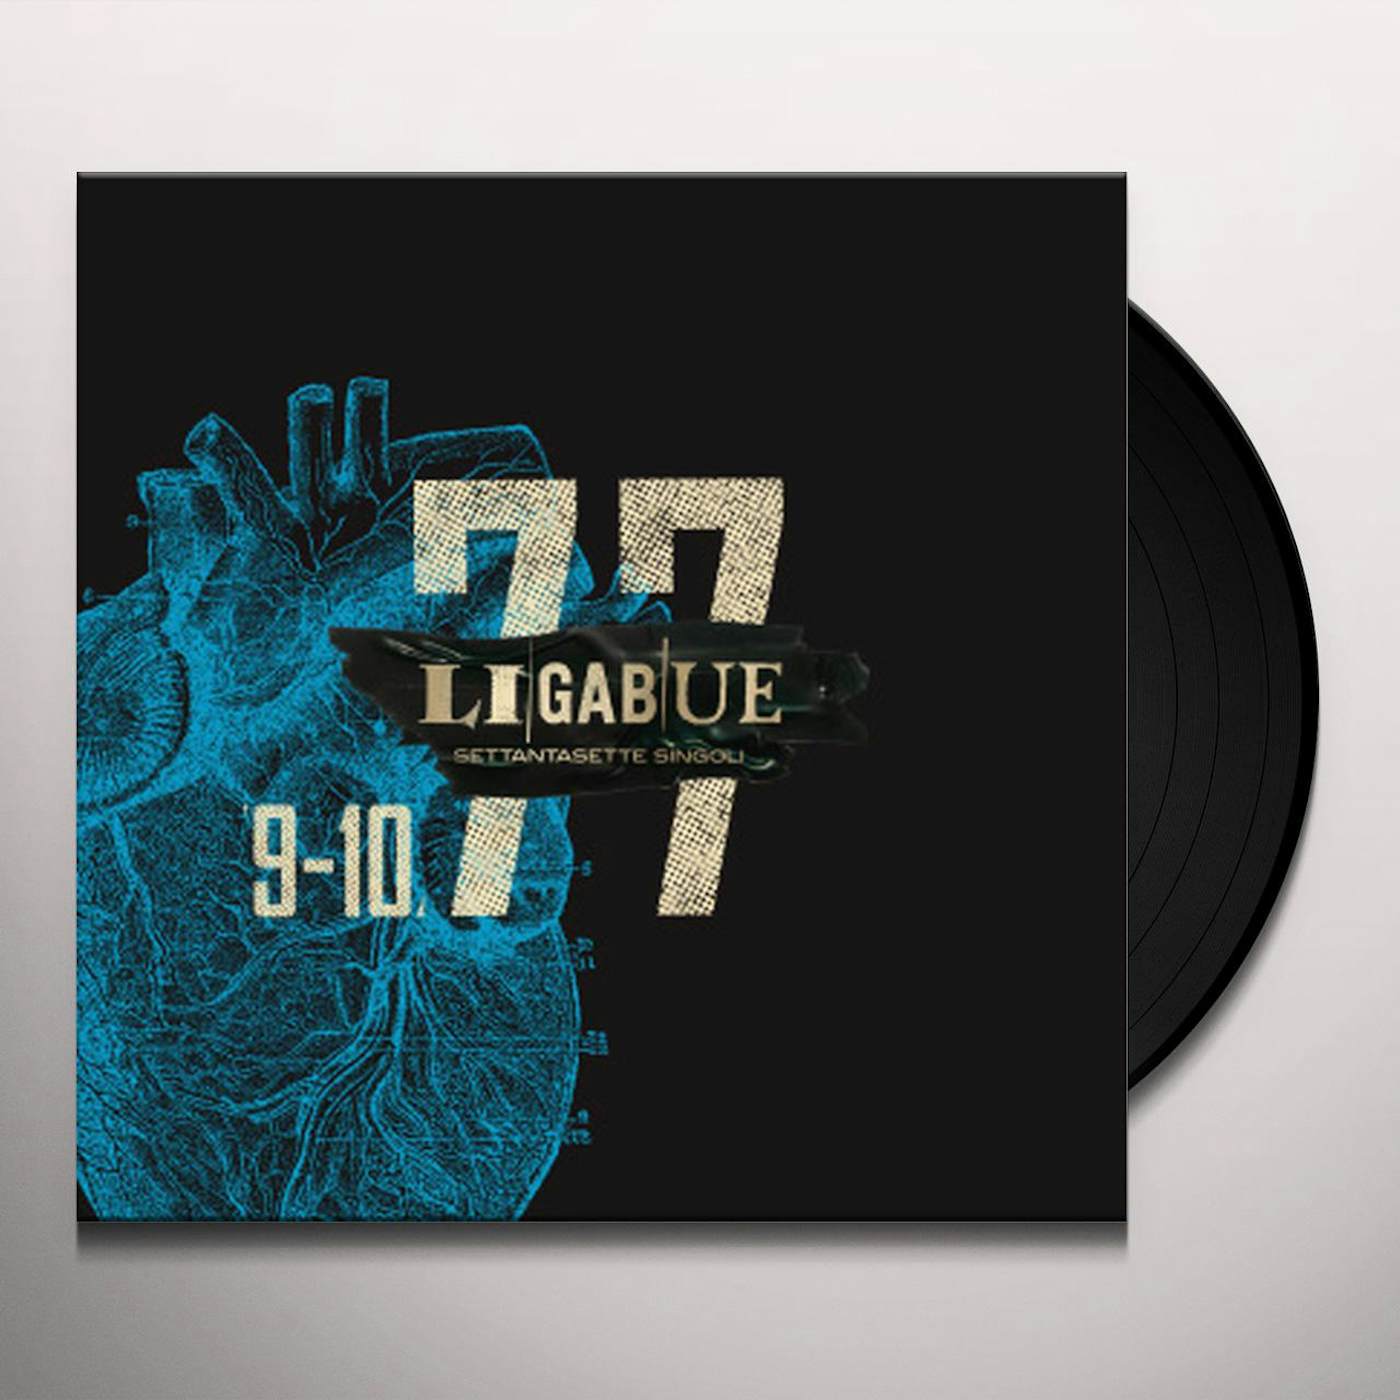 Ligabue 77 SINGOLI / LP 9-LP 10 Vinyl Record